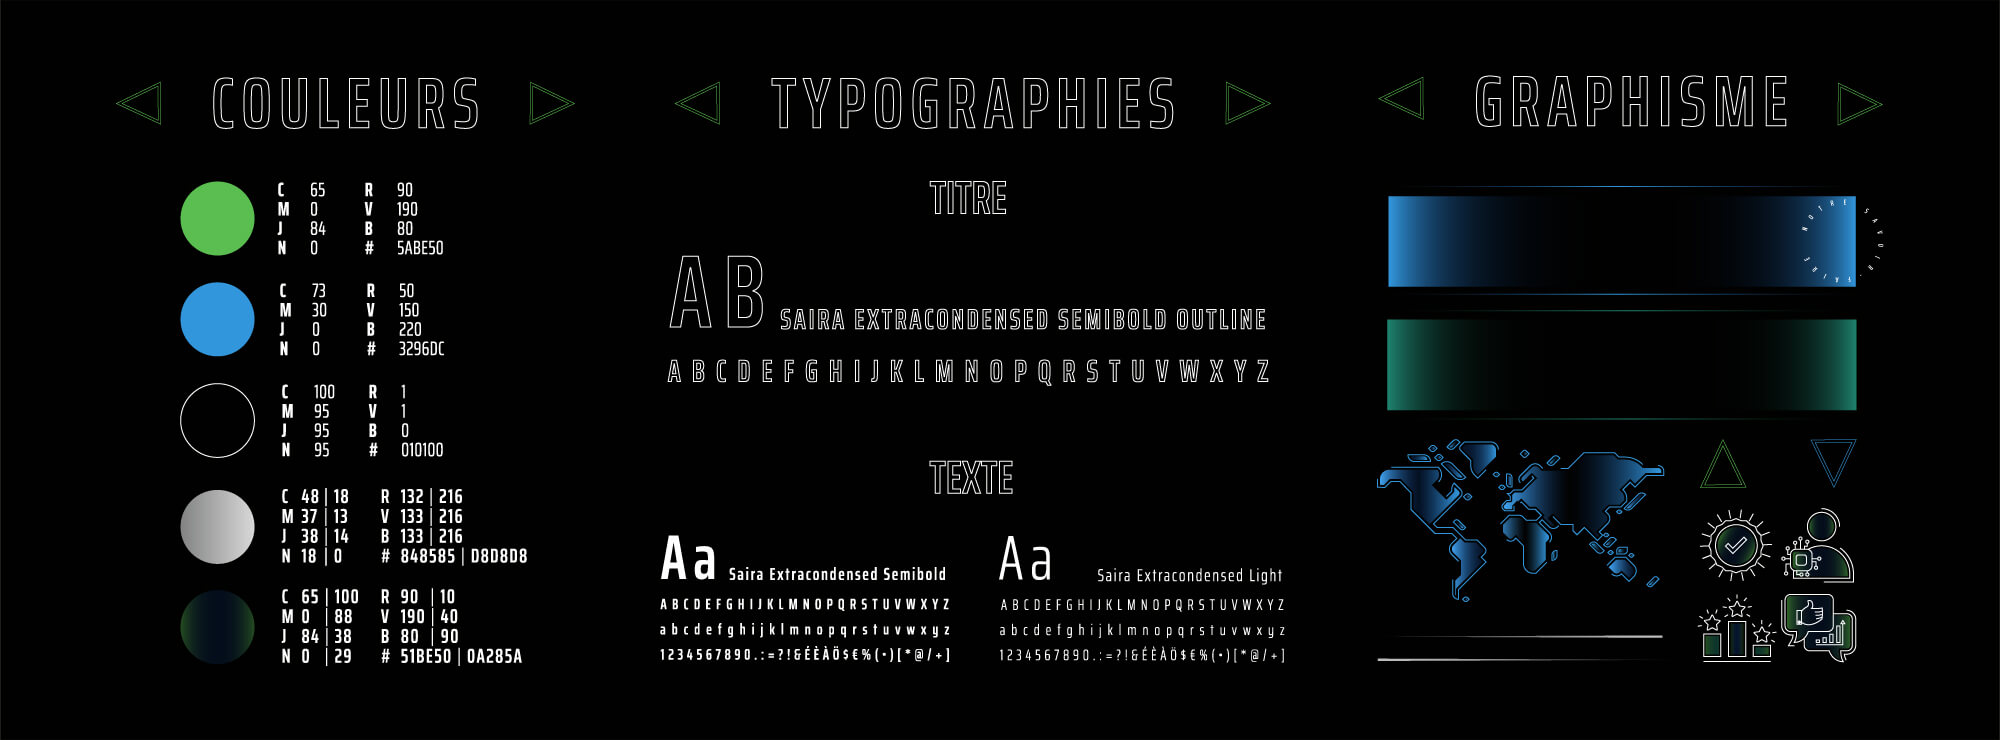 02 atab graphisme couleurs typographie.jpg